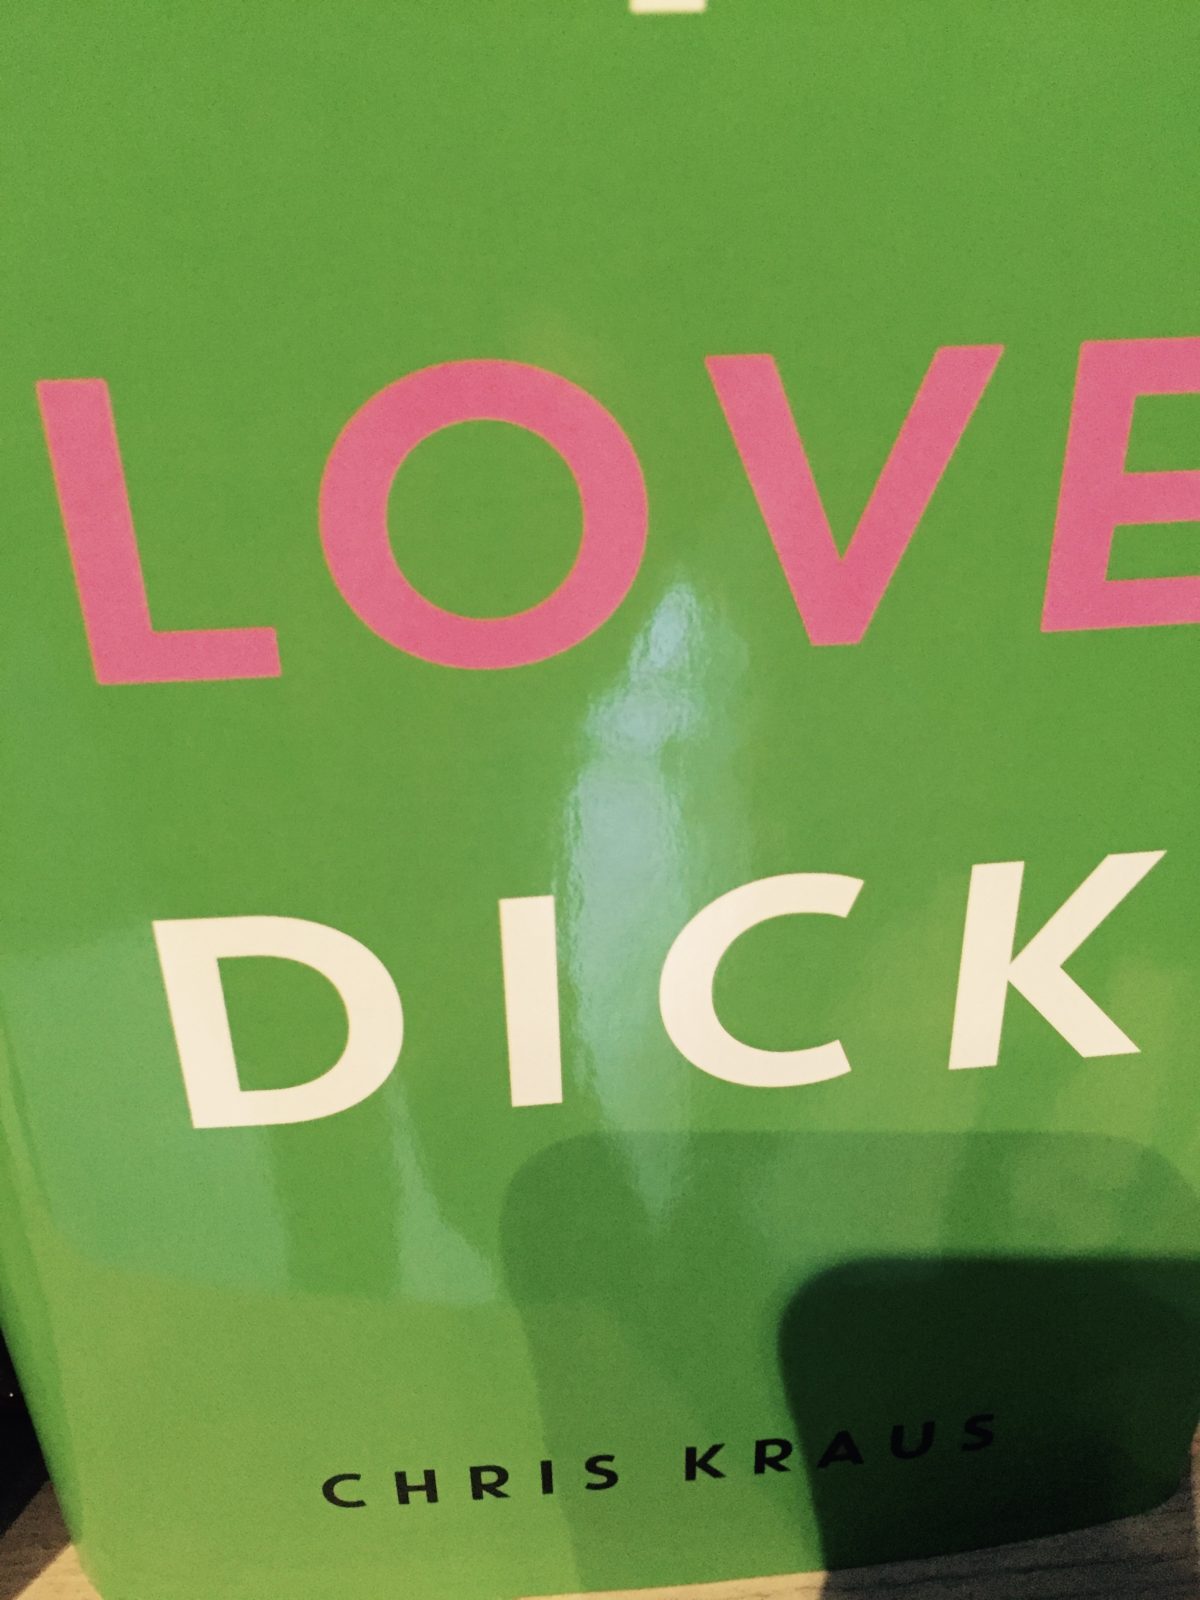 Chris Kraus I love Dick